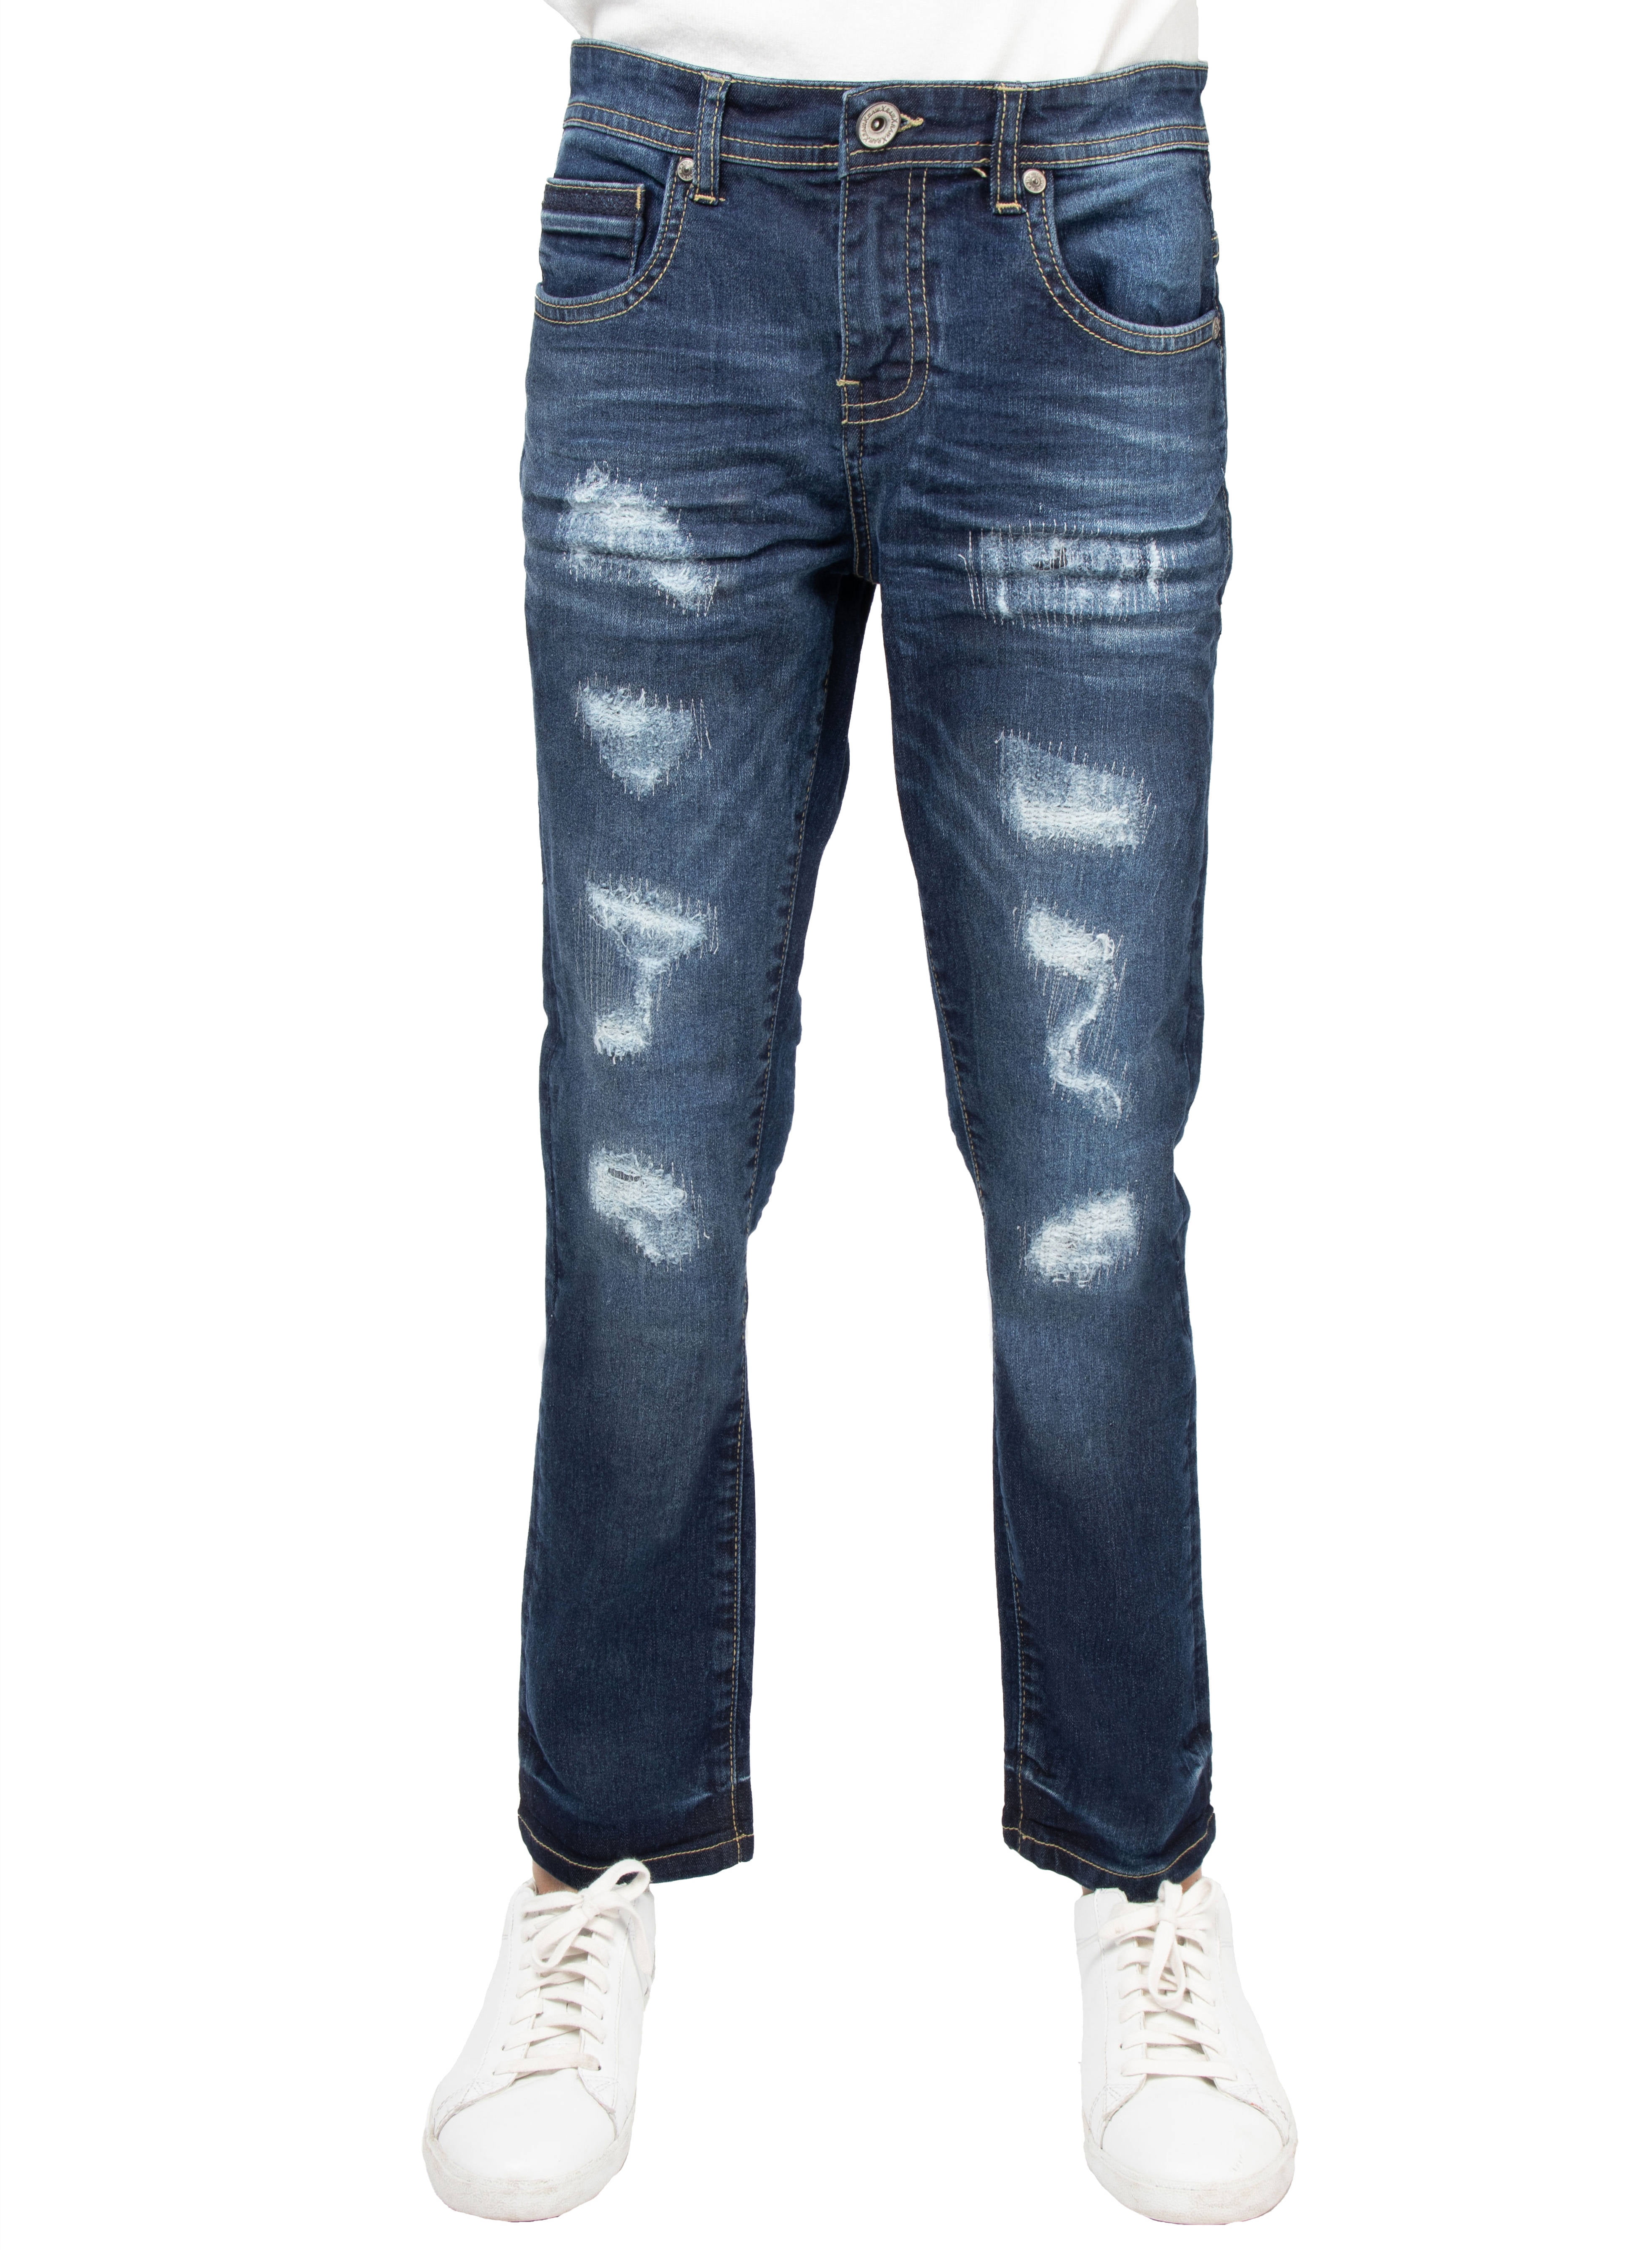 Details more than 152 damage jeans for boy best